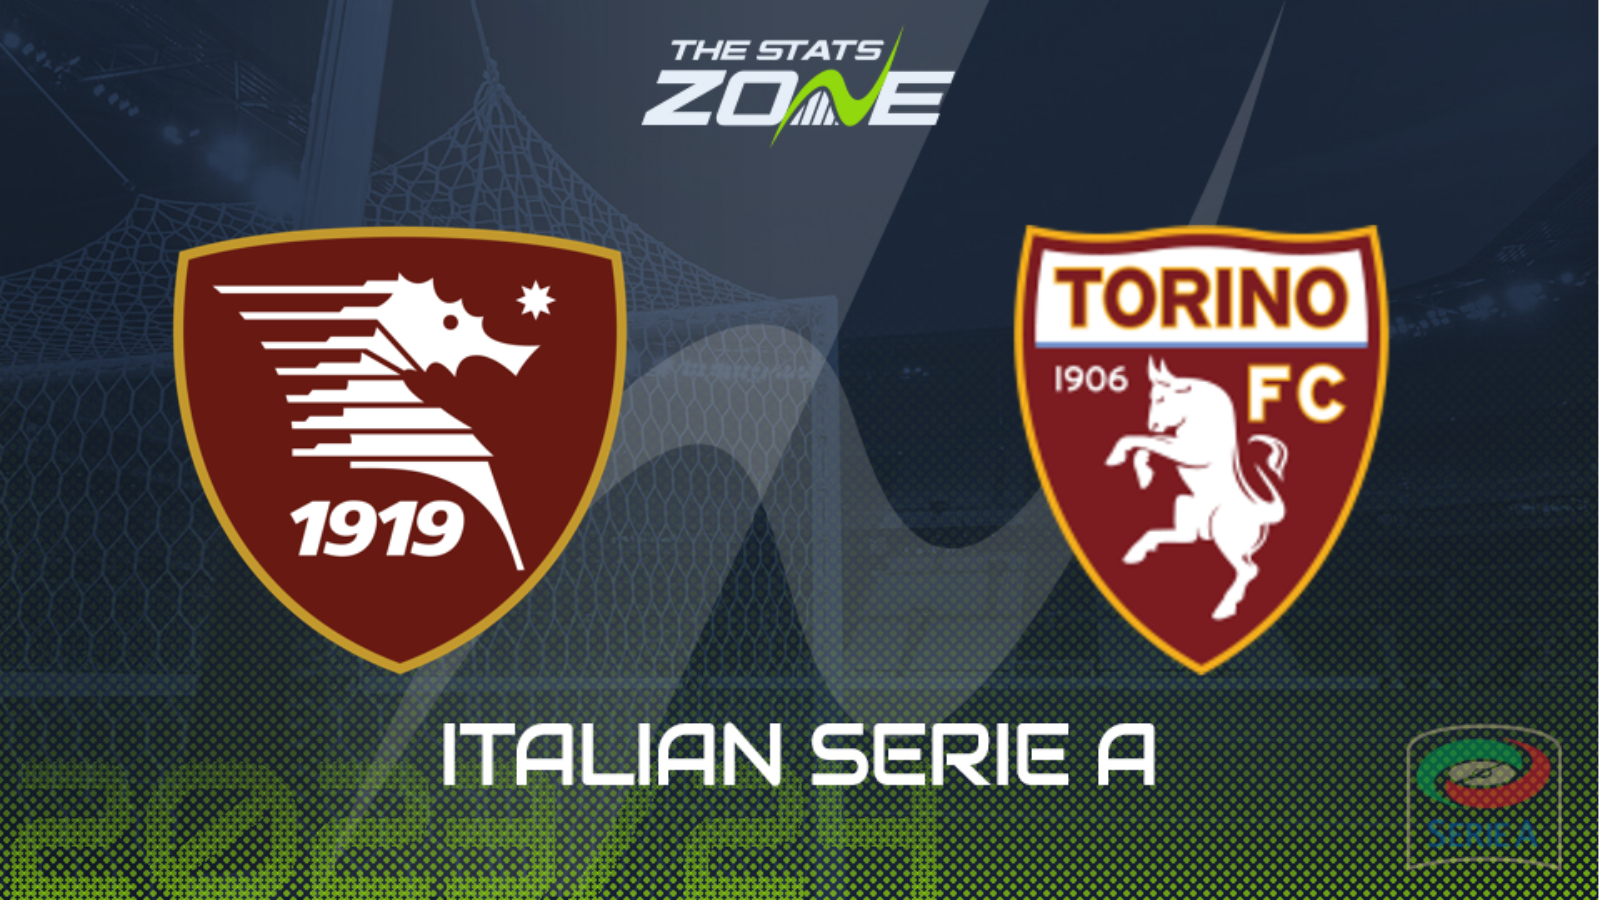 Torino FC vs US Salernitana 1919 Serie A Tickets on sale now